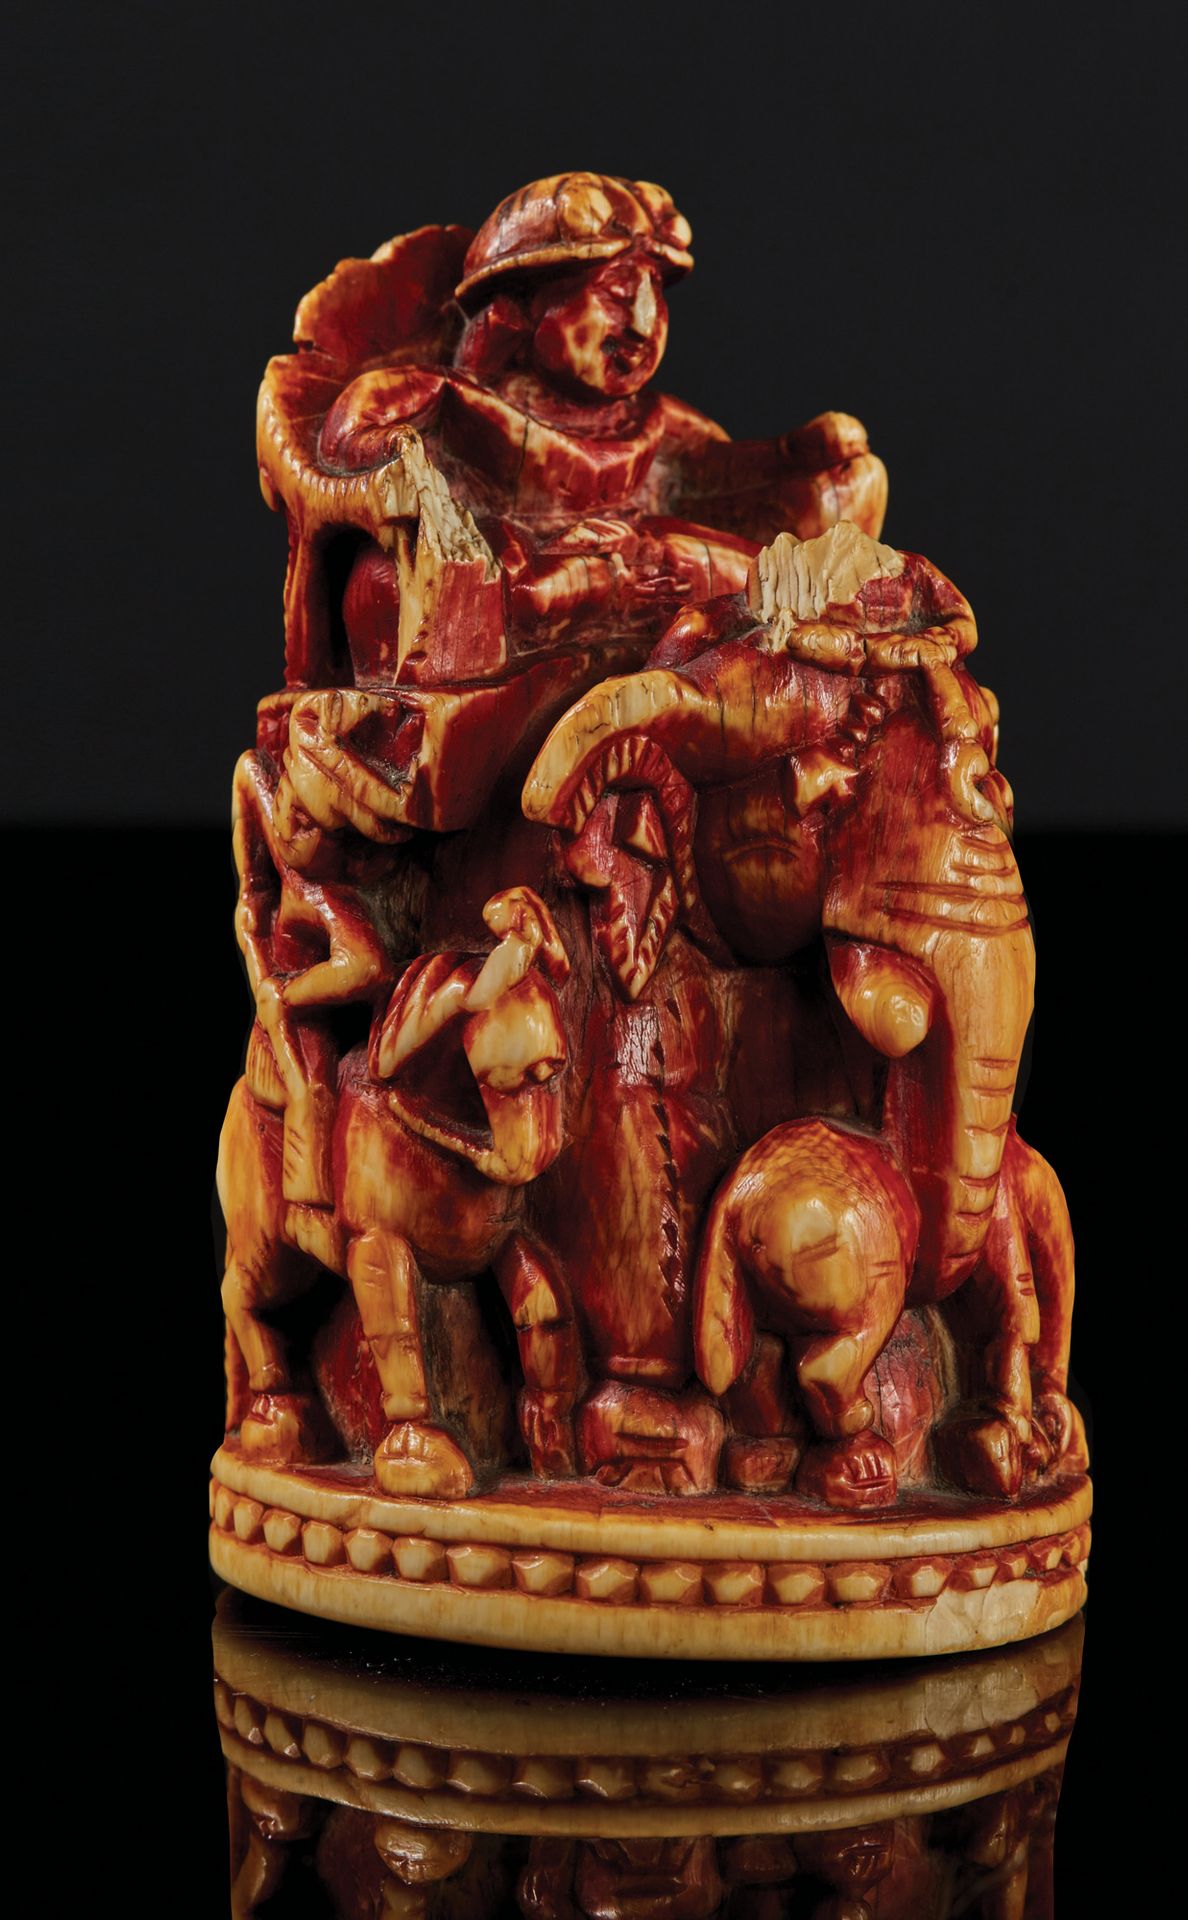 Null 用海洋象牙制成的大象棋子，圆雕，单色红色。它表现的是一头大象抬着一顶轿子，轿子上坐着一位政要，他的双腿弯曲，双臂放在宝座的扶手上；他的头上戴着一顶头盔&hellip;